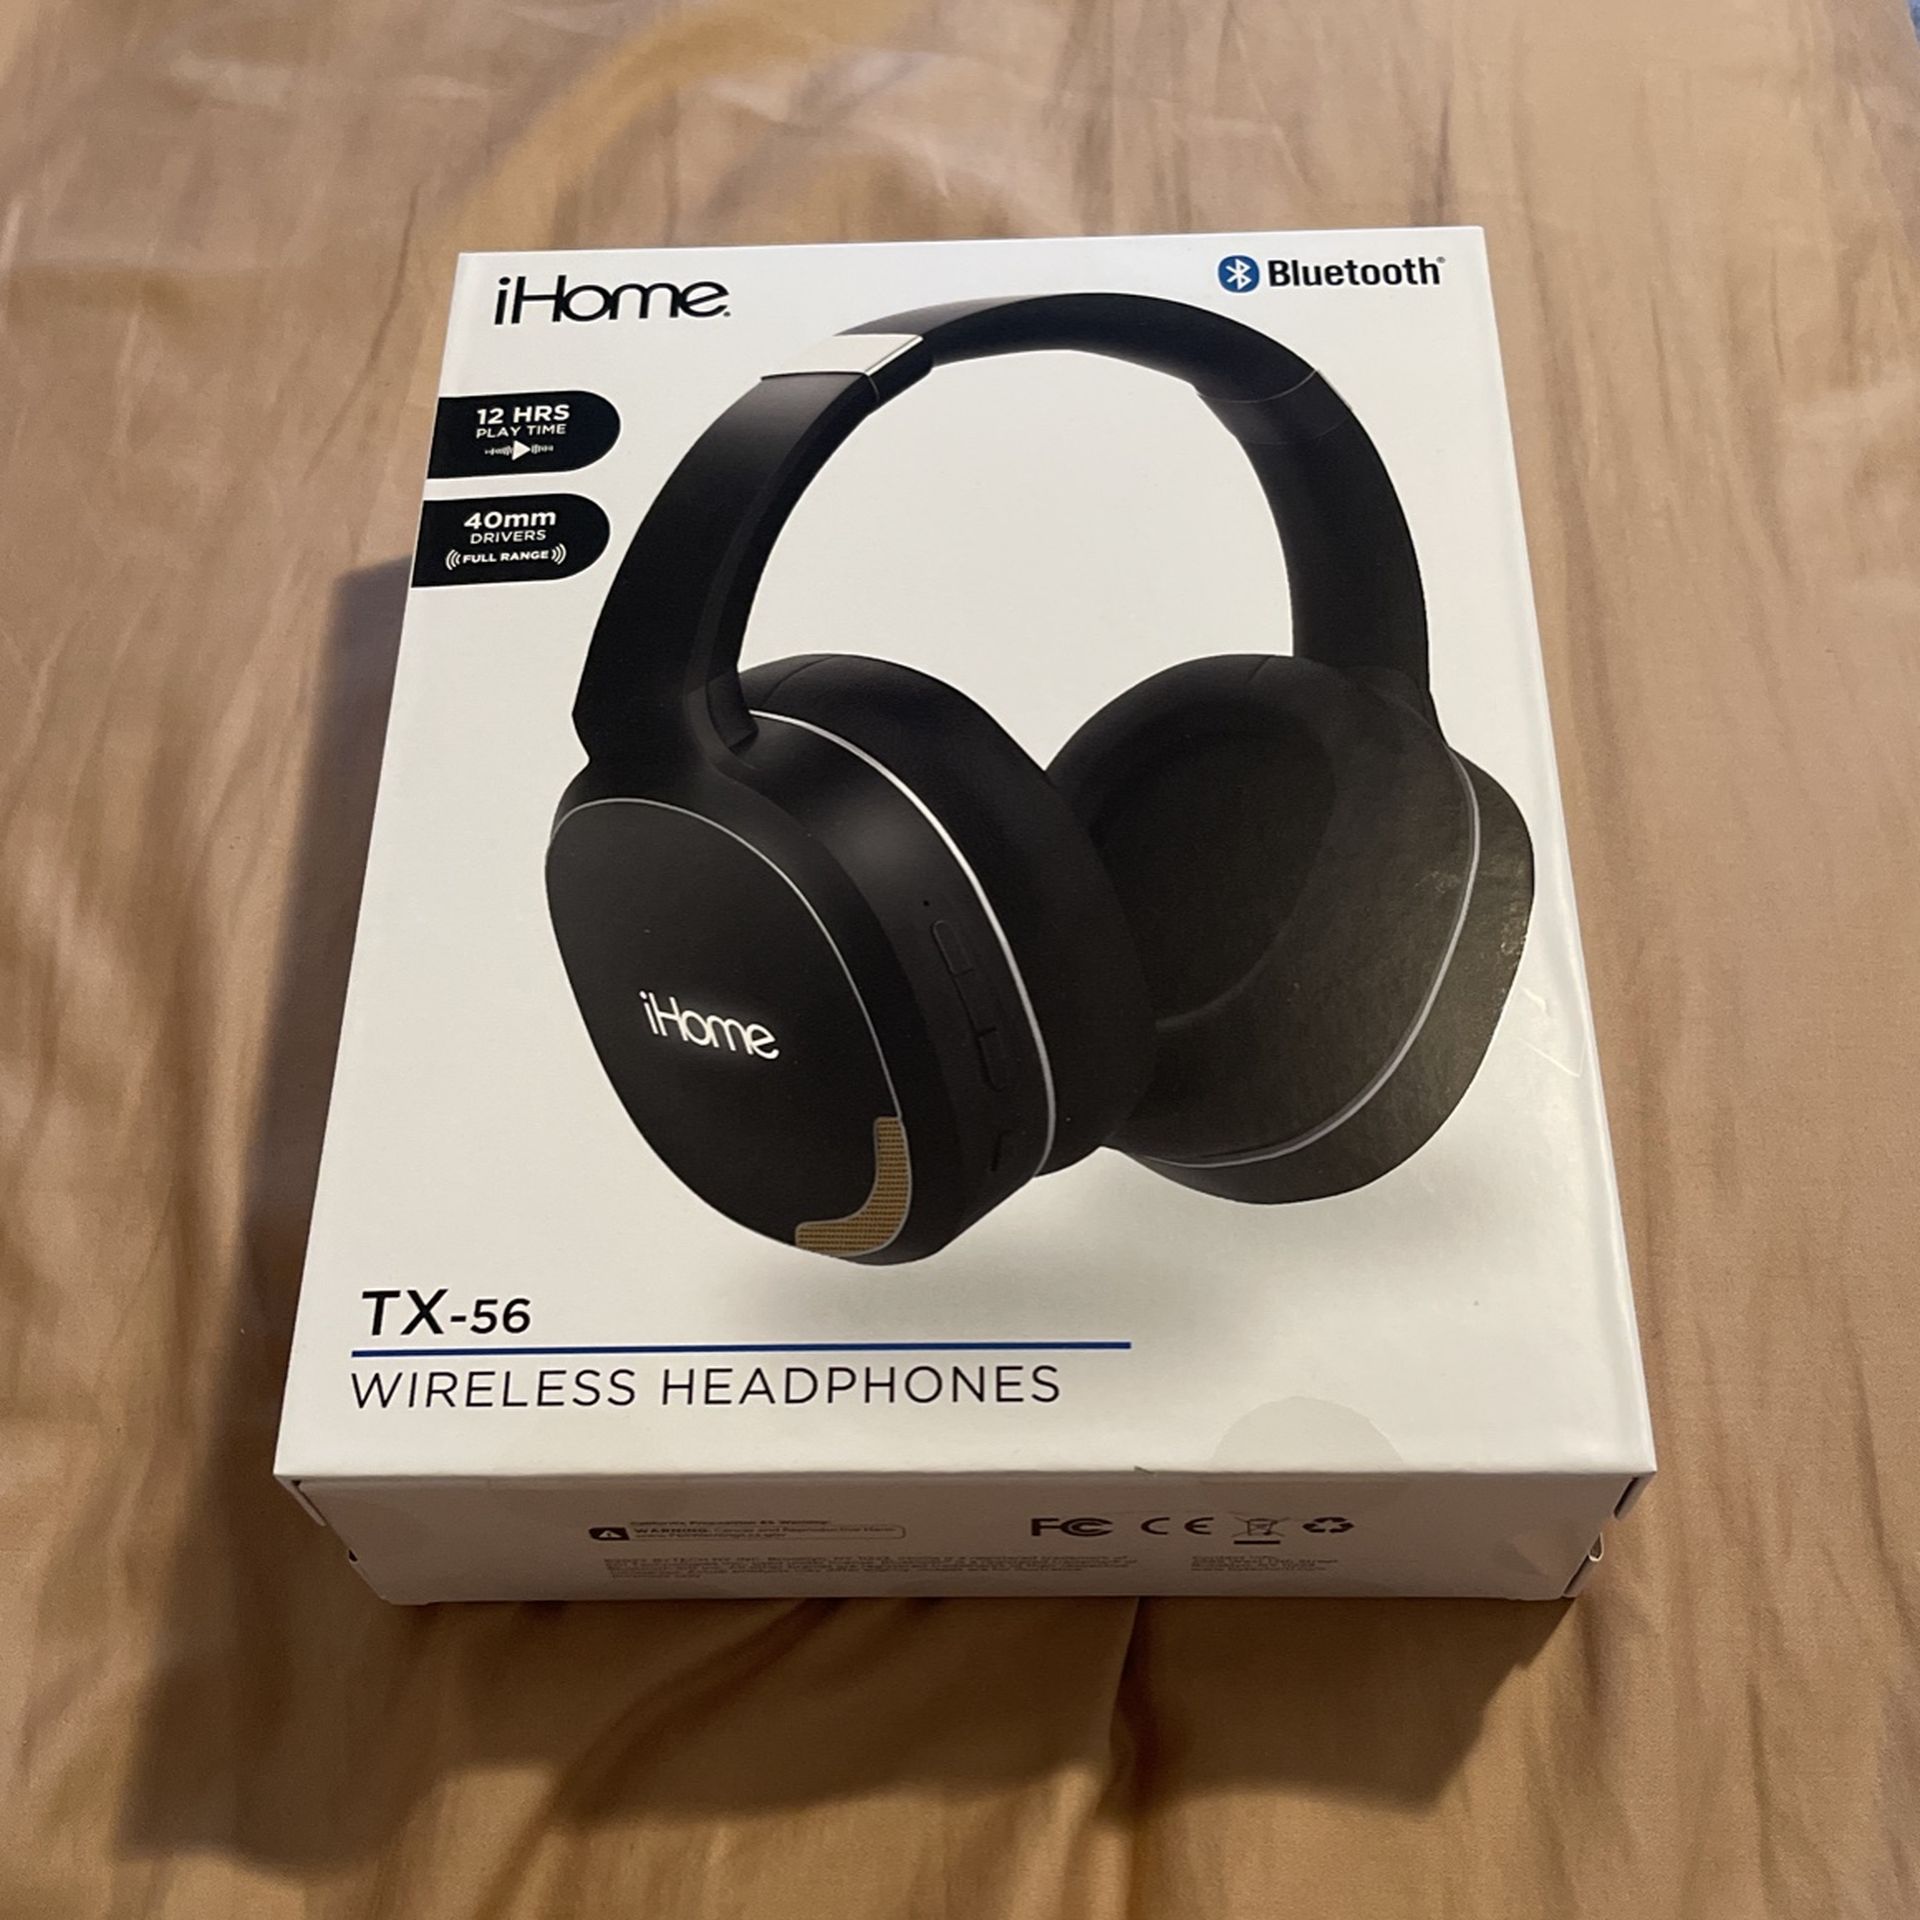 TX-56 Wireless Headphones